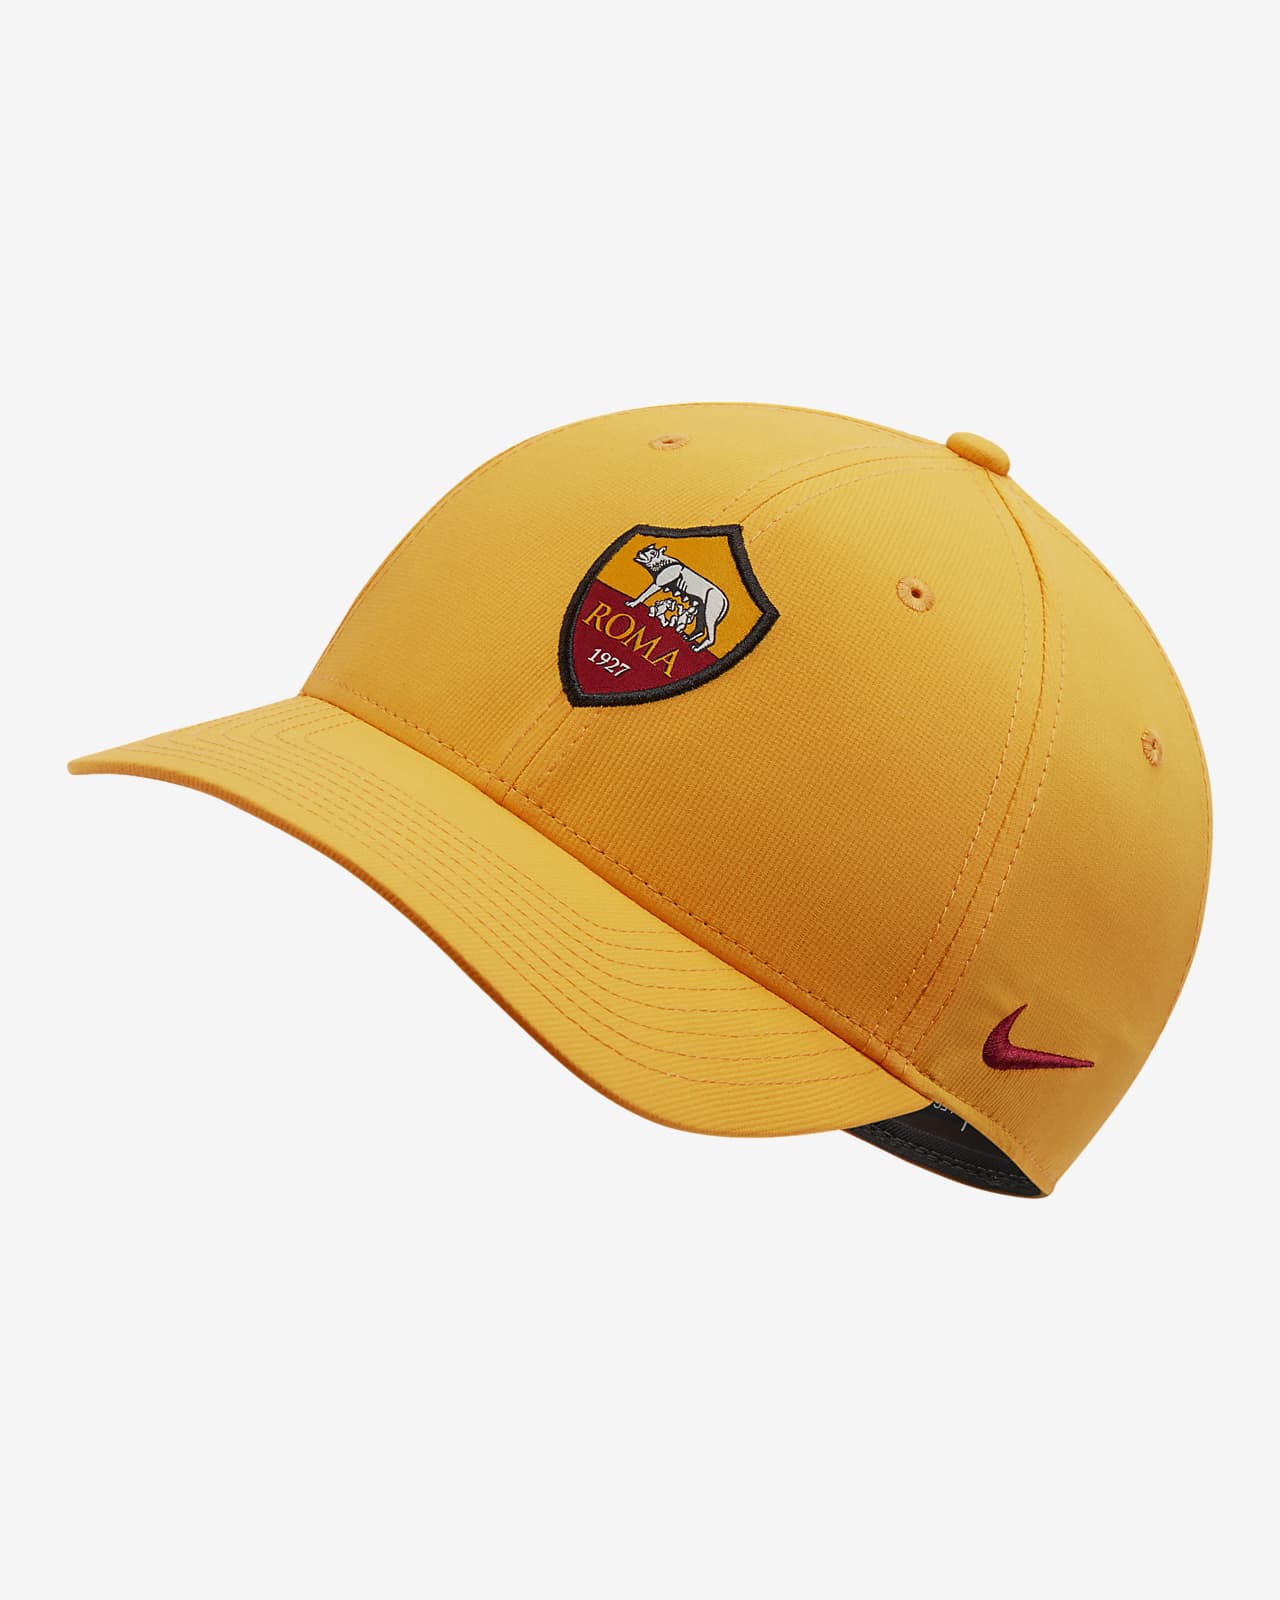 A.S. Roma Legacy91 Adjustable Hat. Nike LU